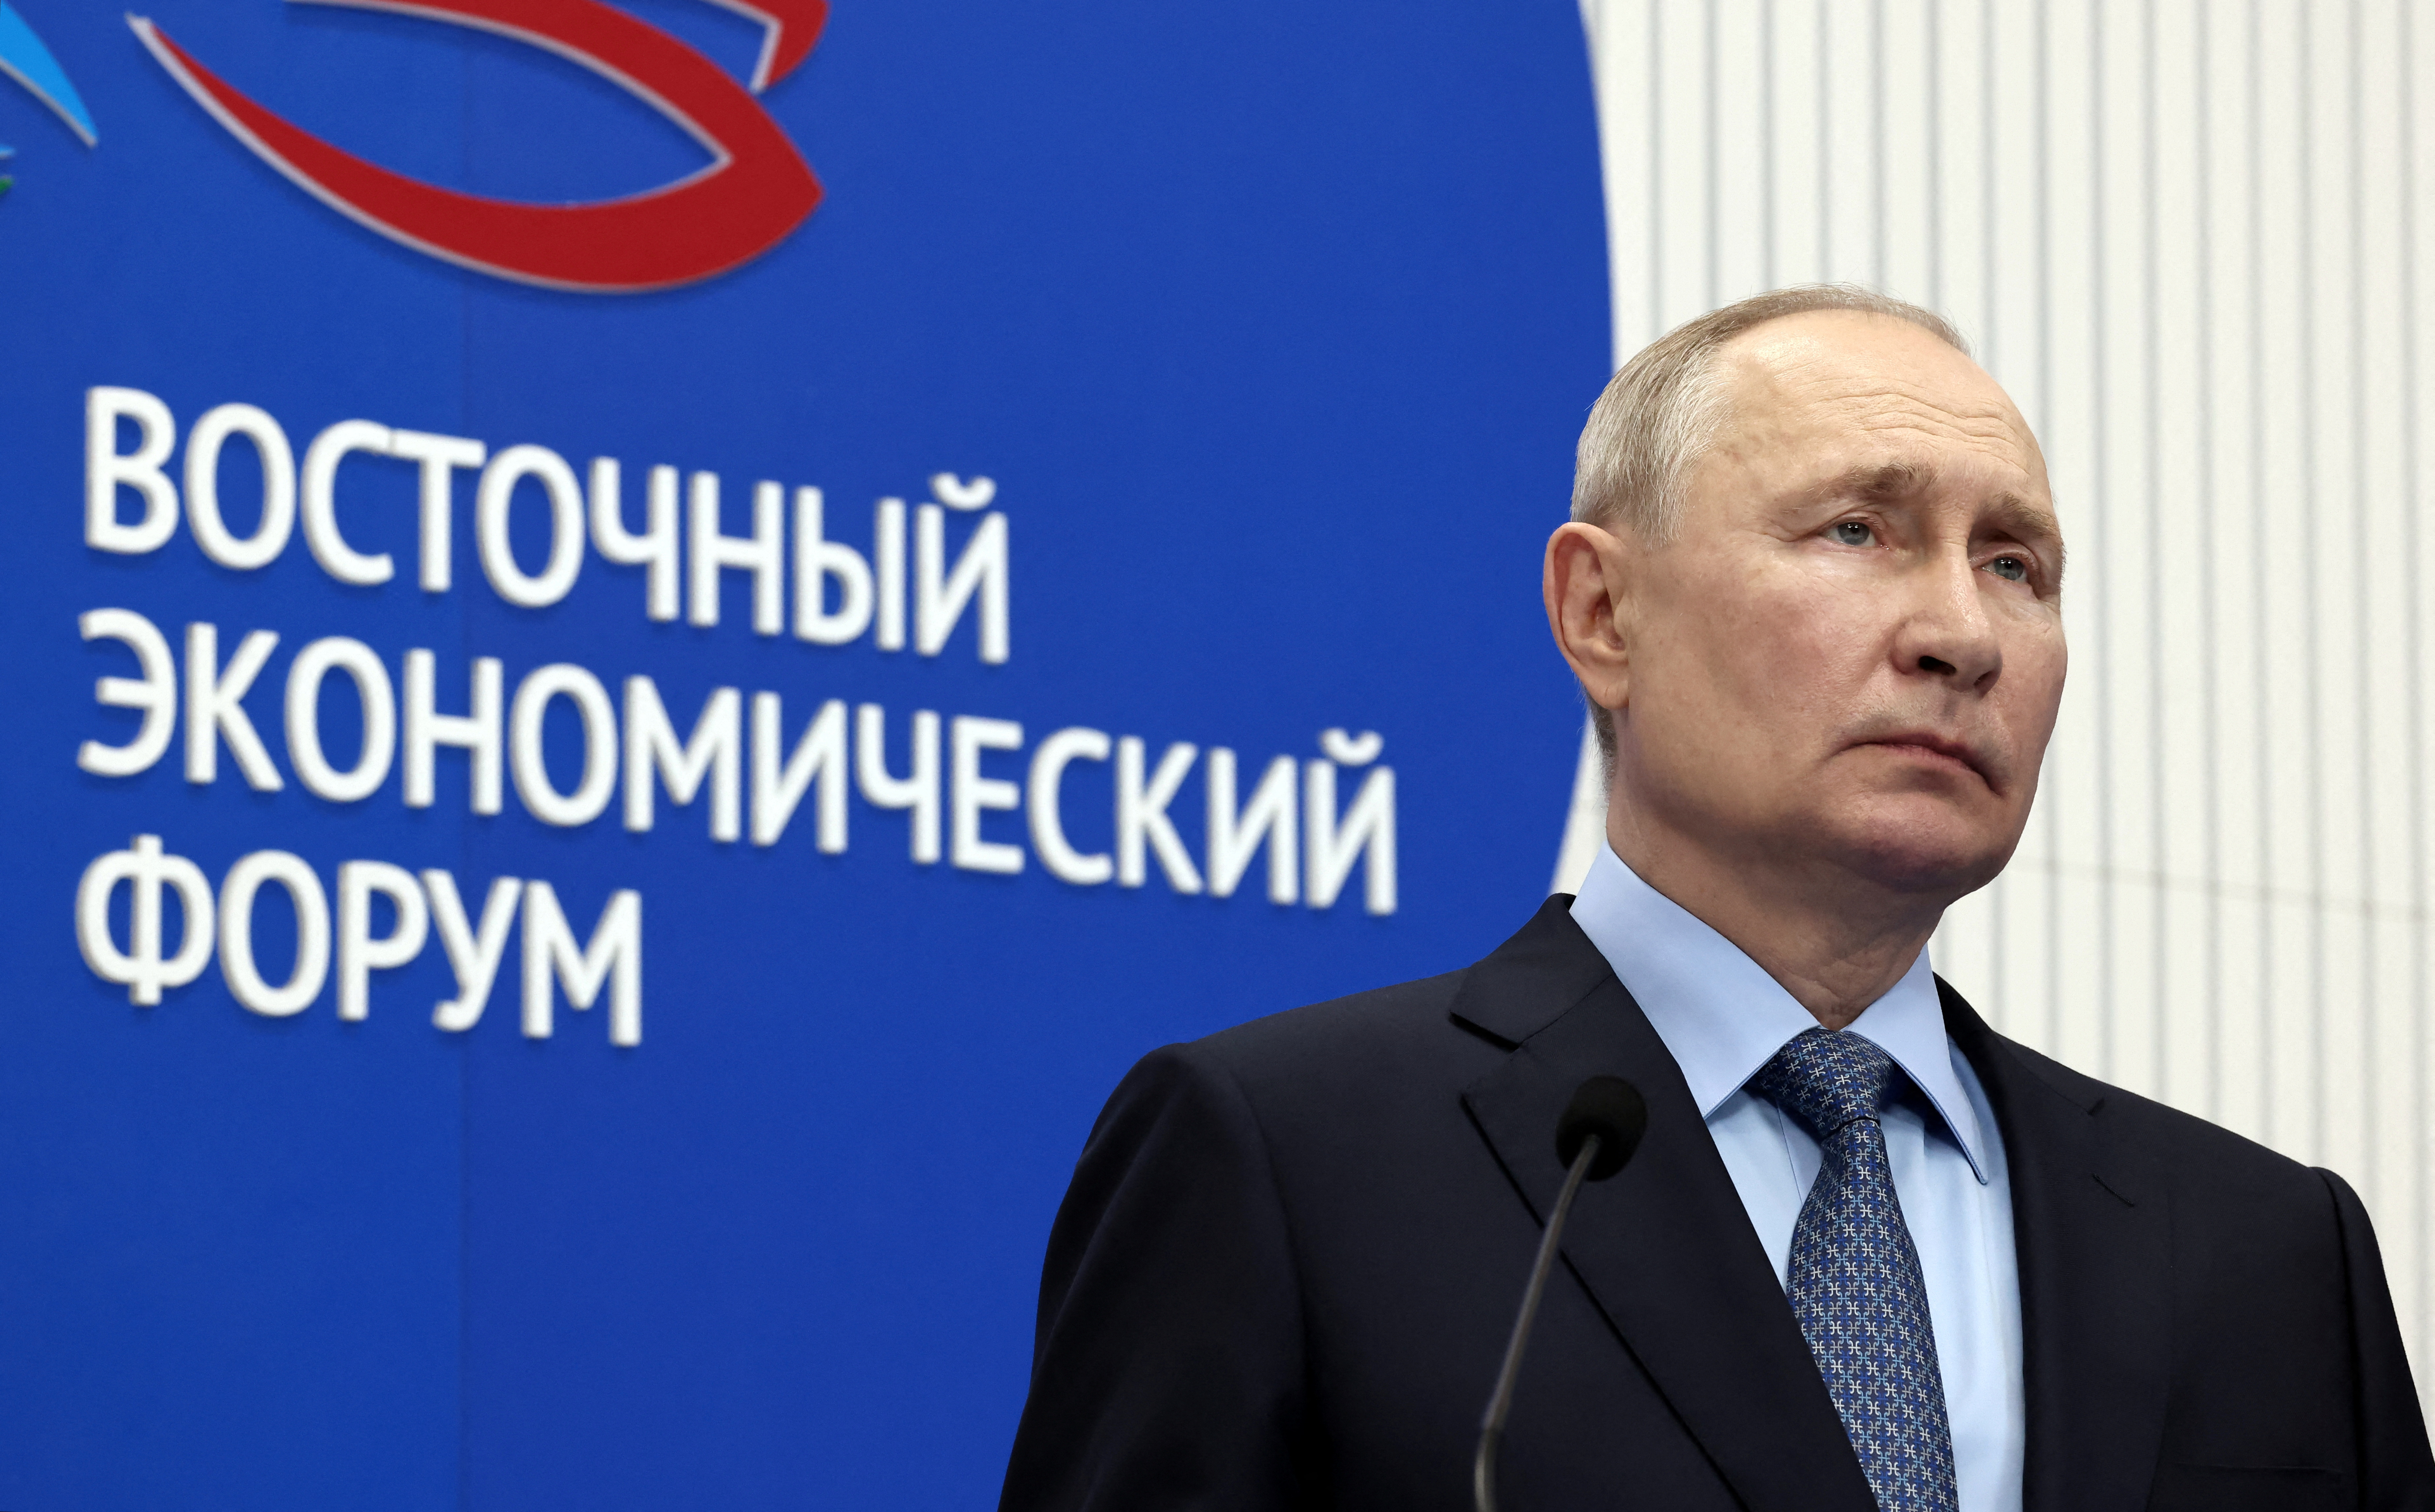 Russian President Vladimir Putin listens to a report in Vladivostok